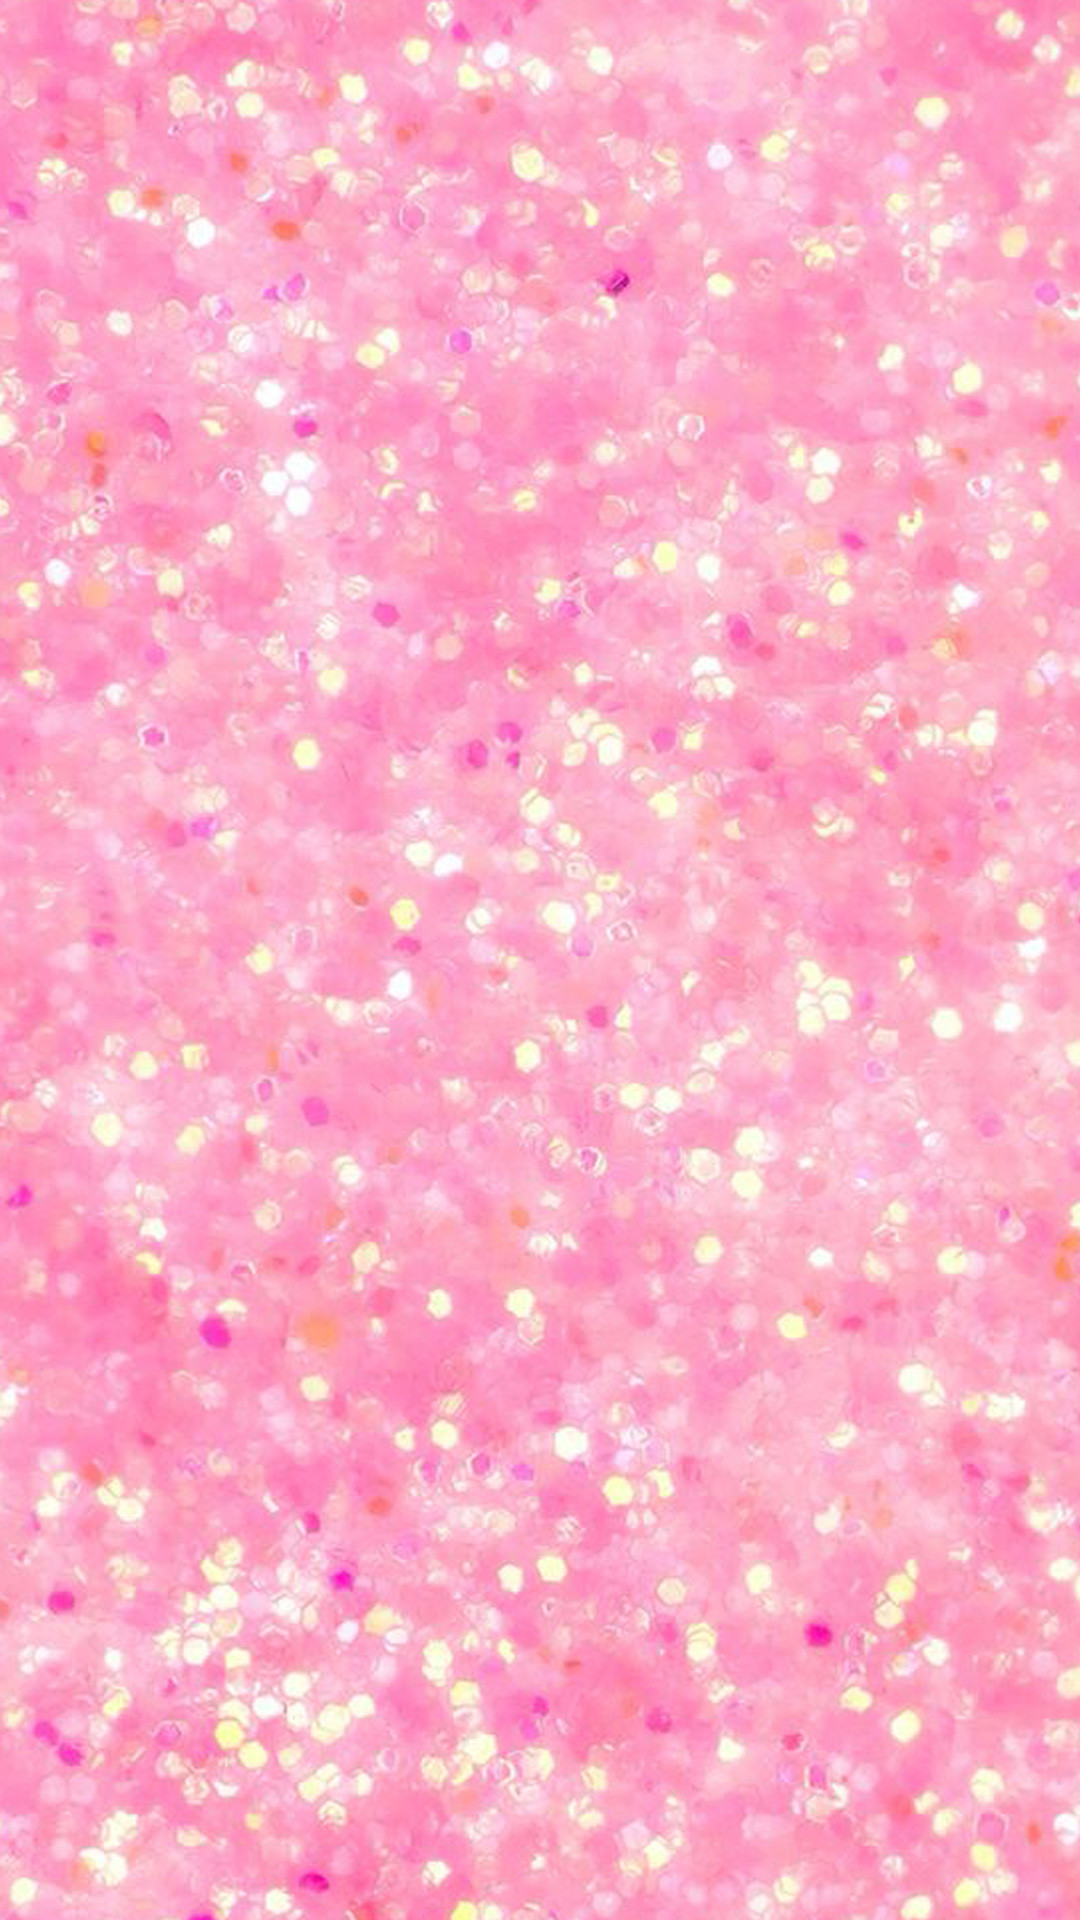 1080x1920 Pink Glitter Girly Wallpaper IPhone